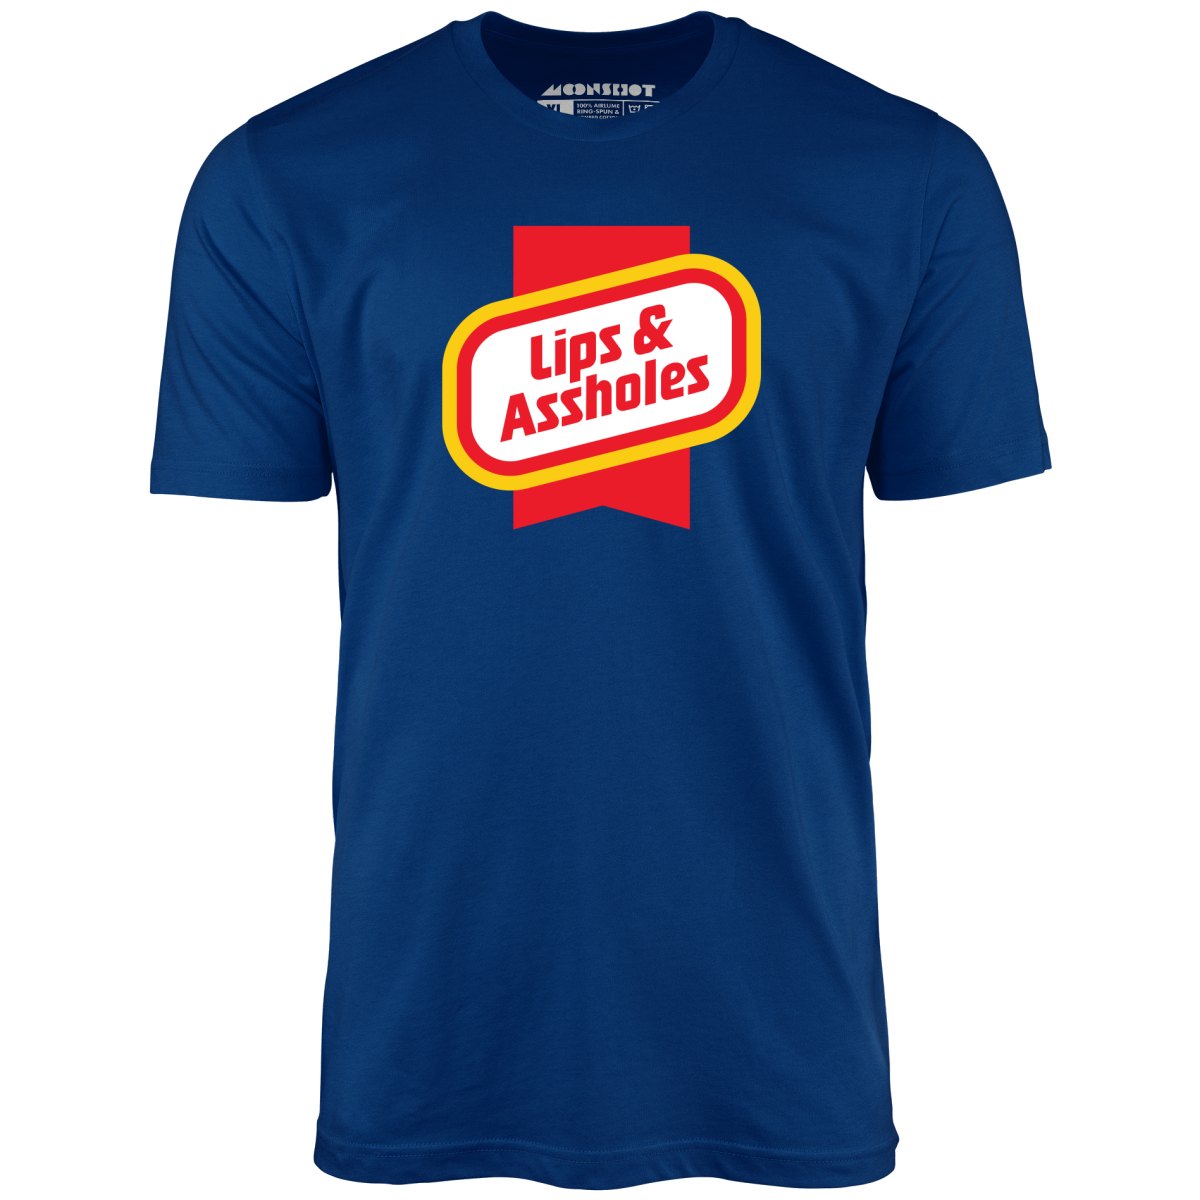 Lips & Assholes - Unisex T-Shirt